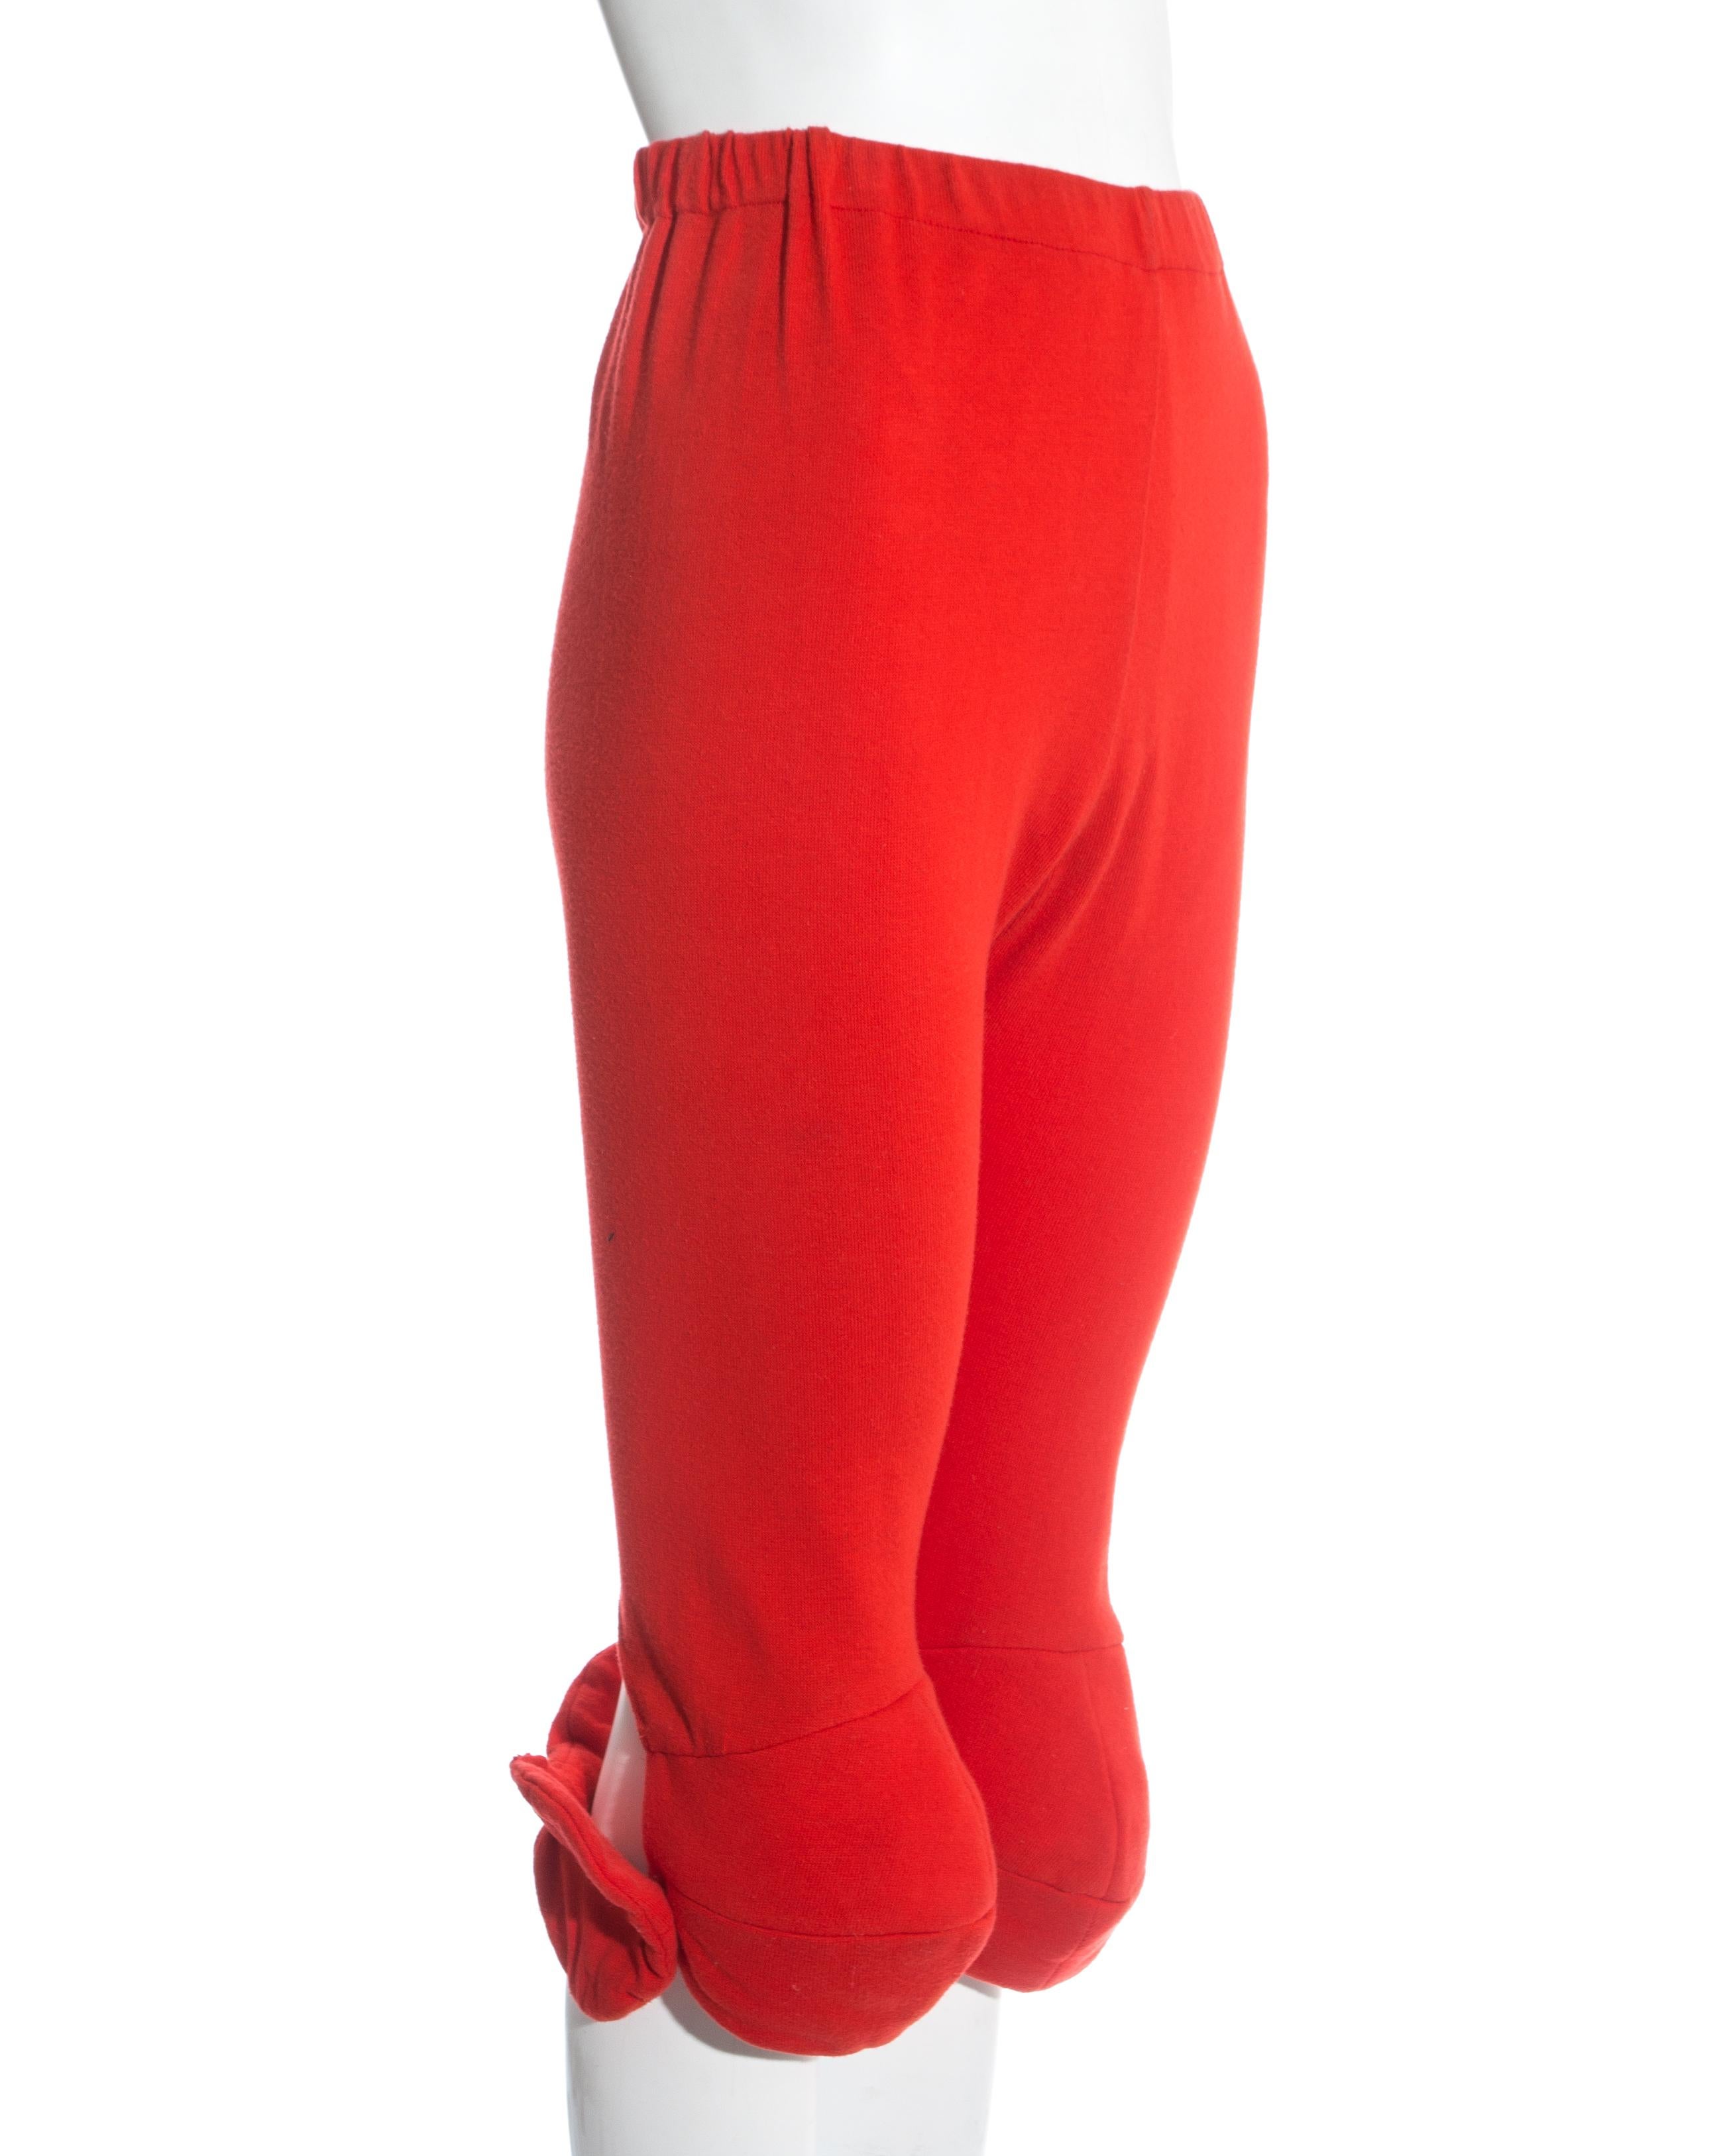 Vivienne Westwood red cotton jersey stirrup leggings.

'Civilizade' Spring-Summer 1989

